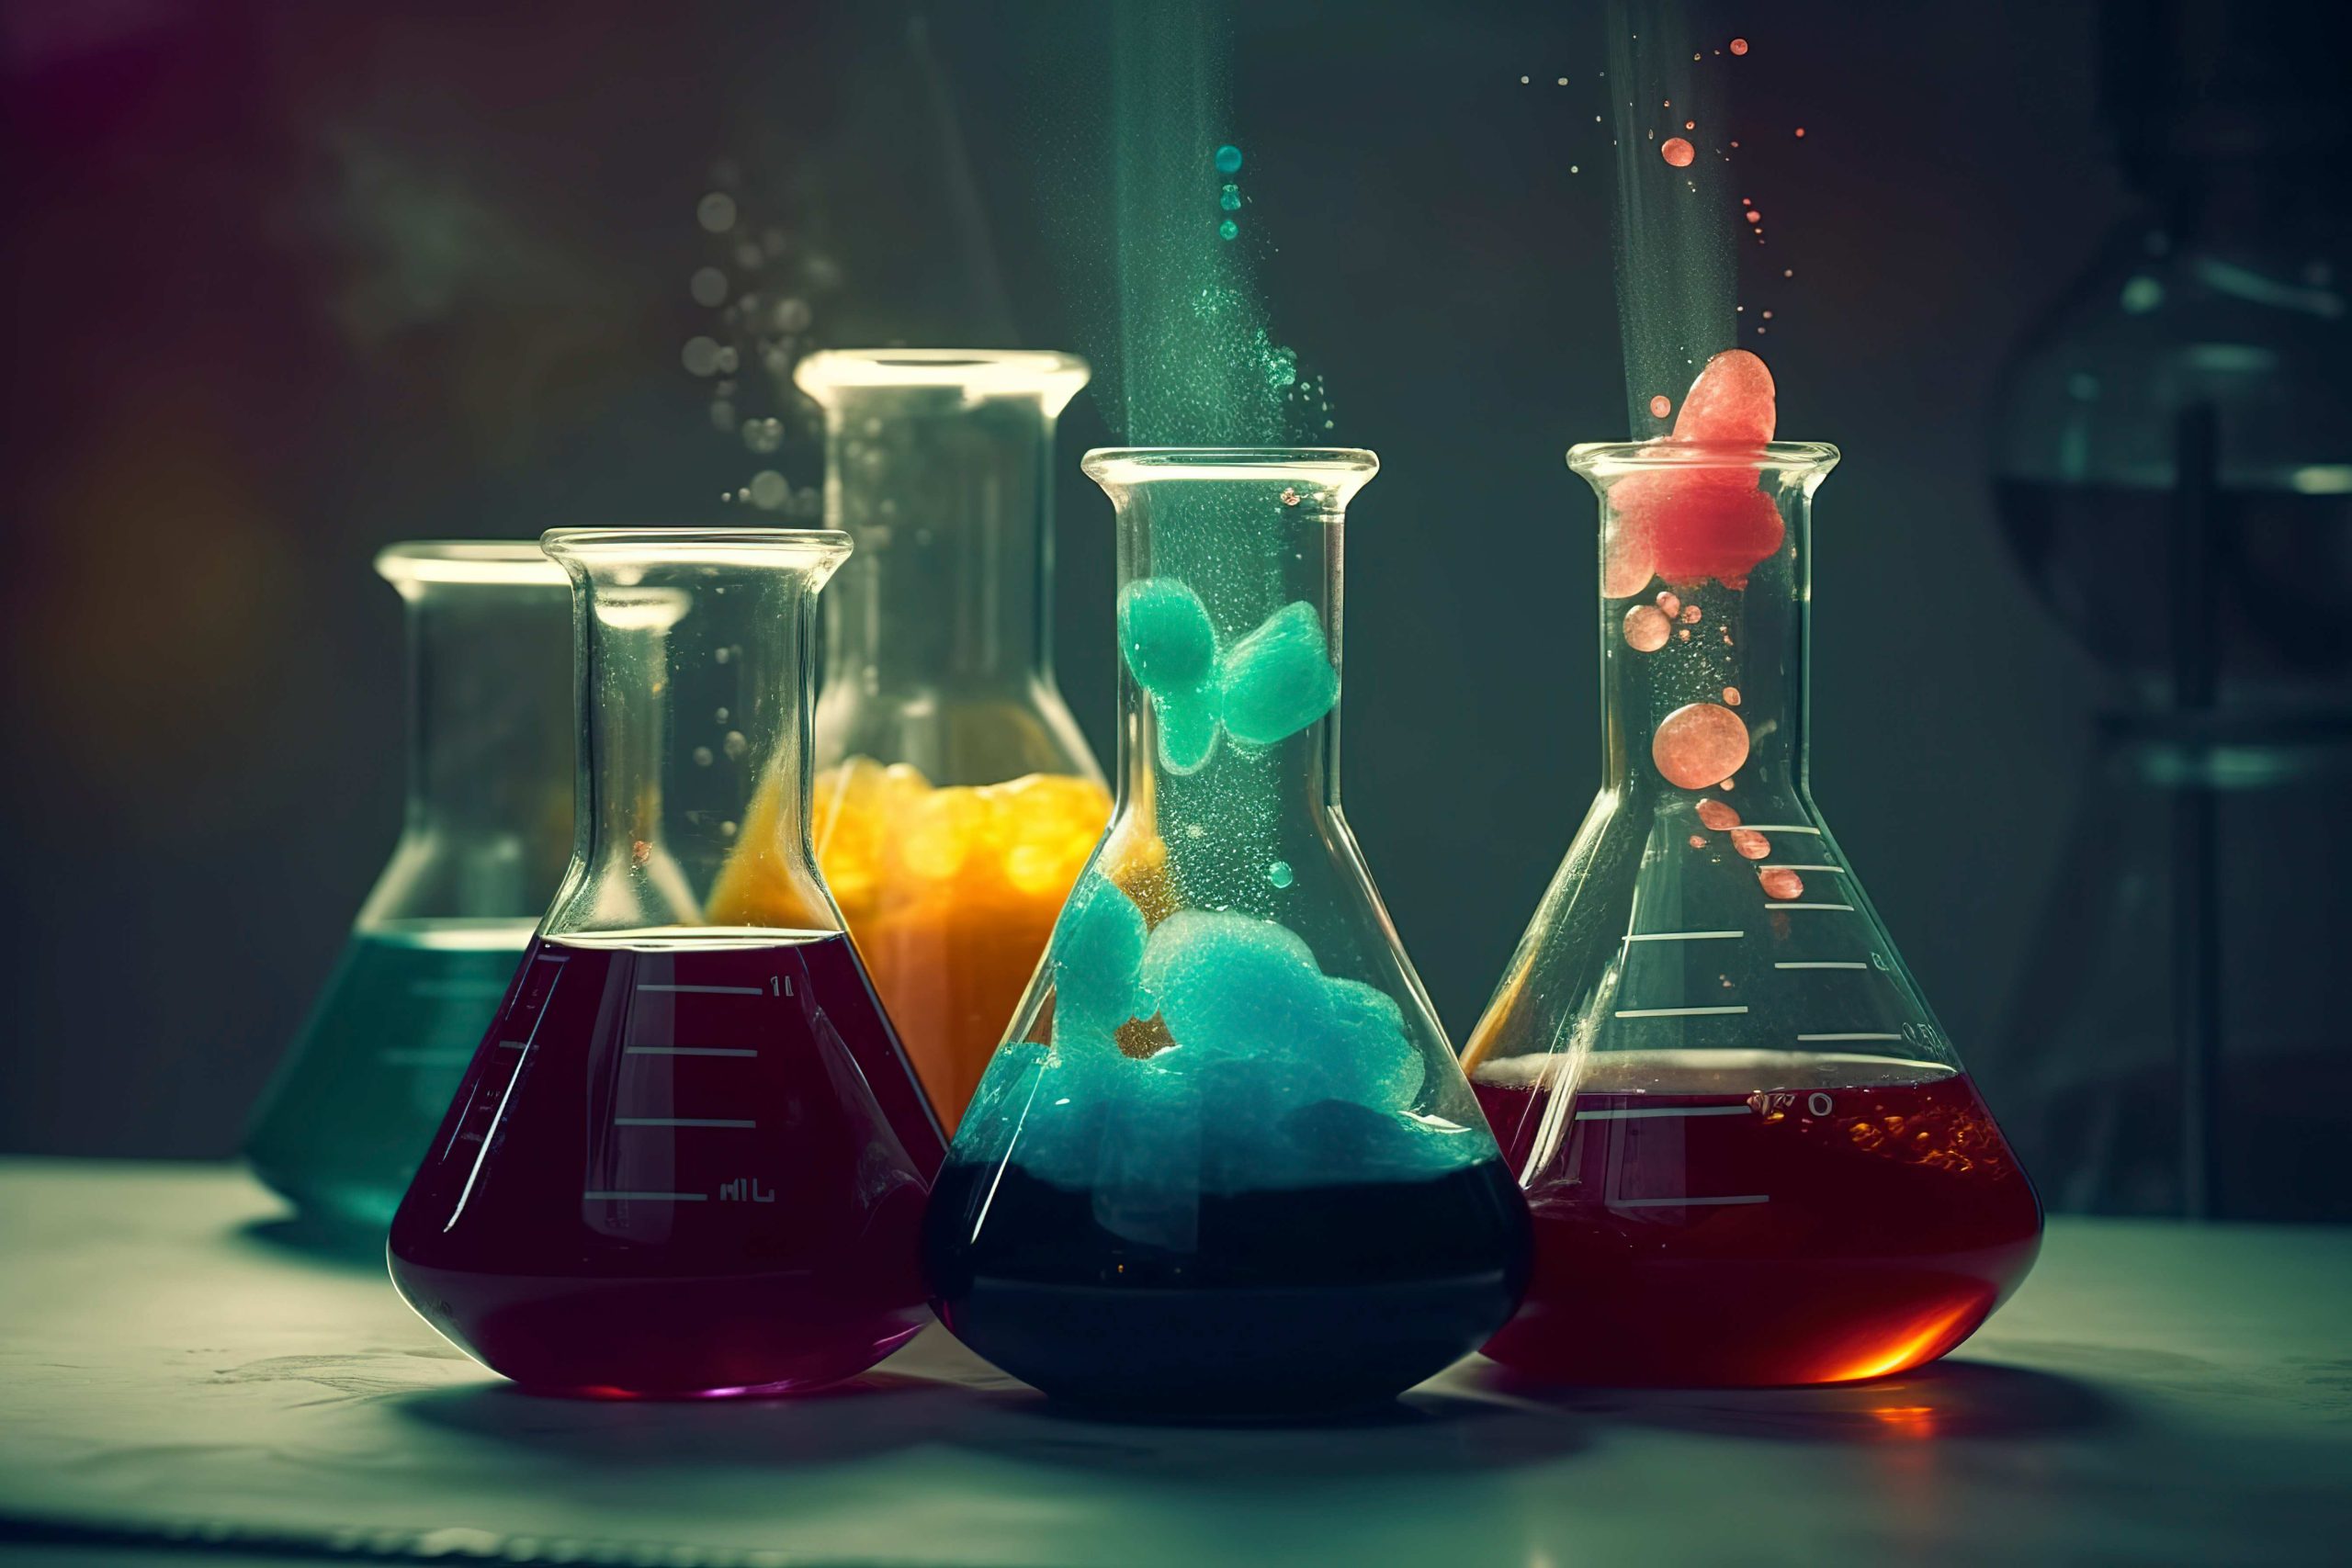 World of Chemistry